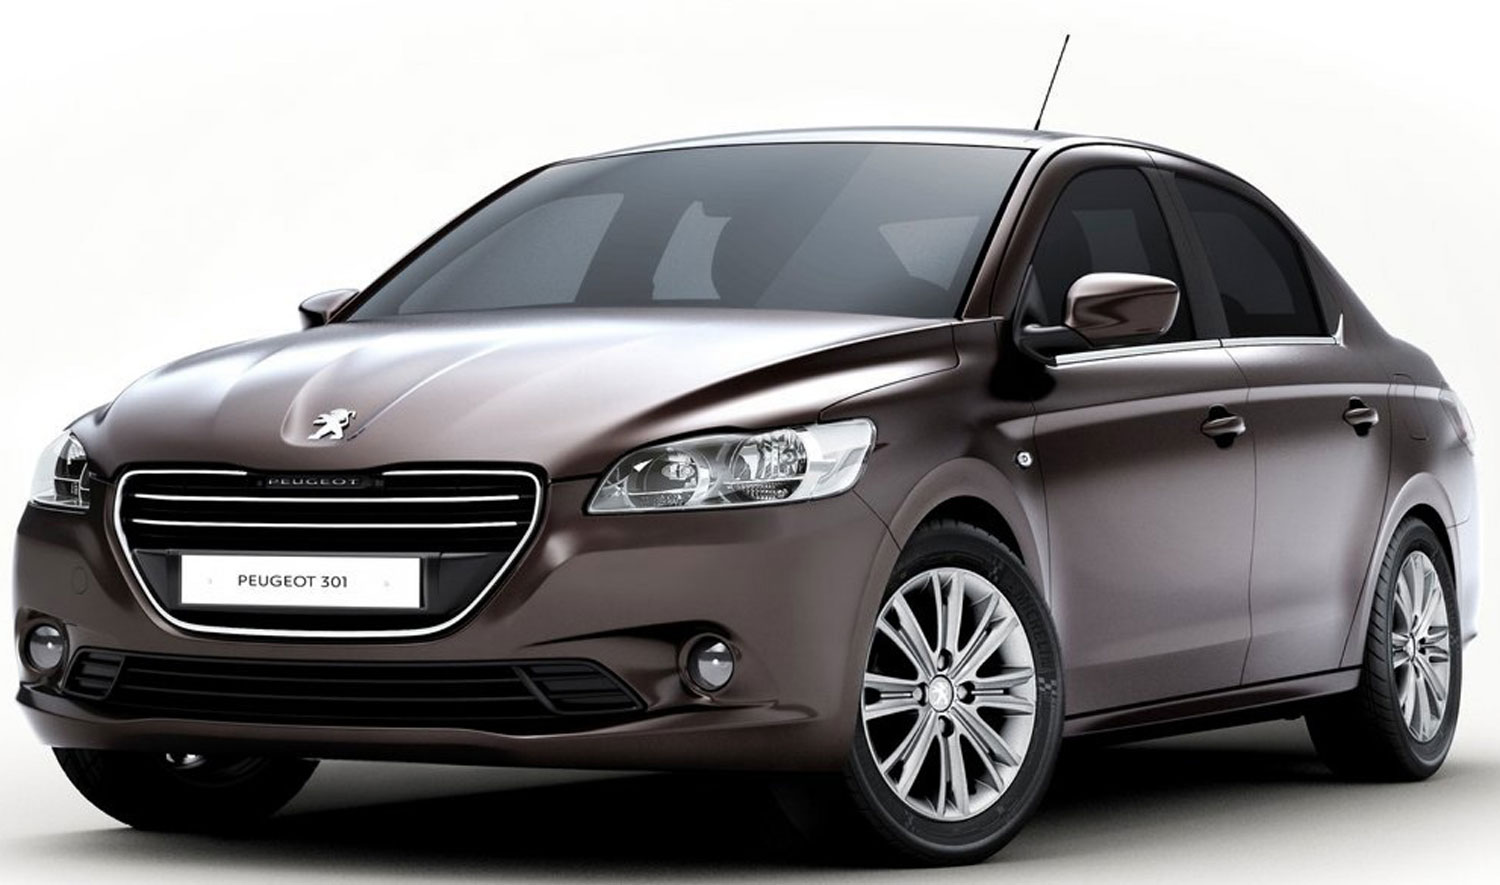 Peugeot bendigo Serv Auto Care Service